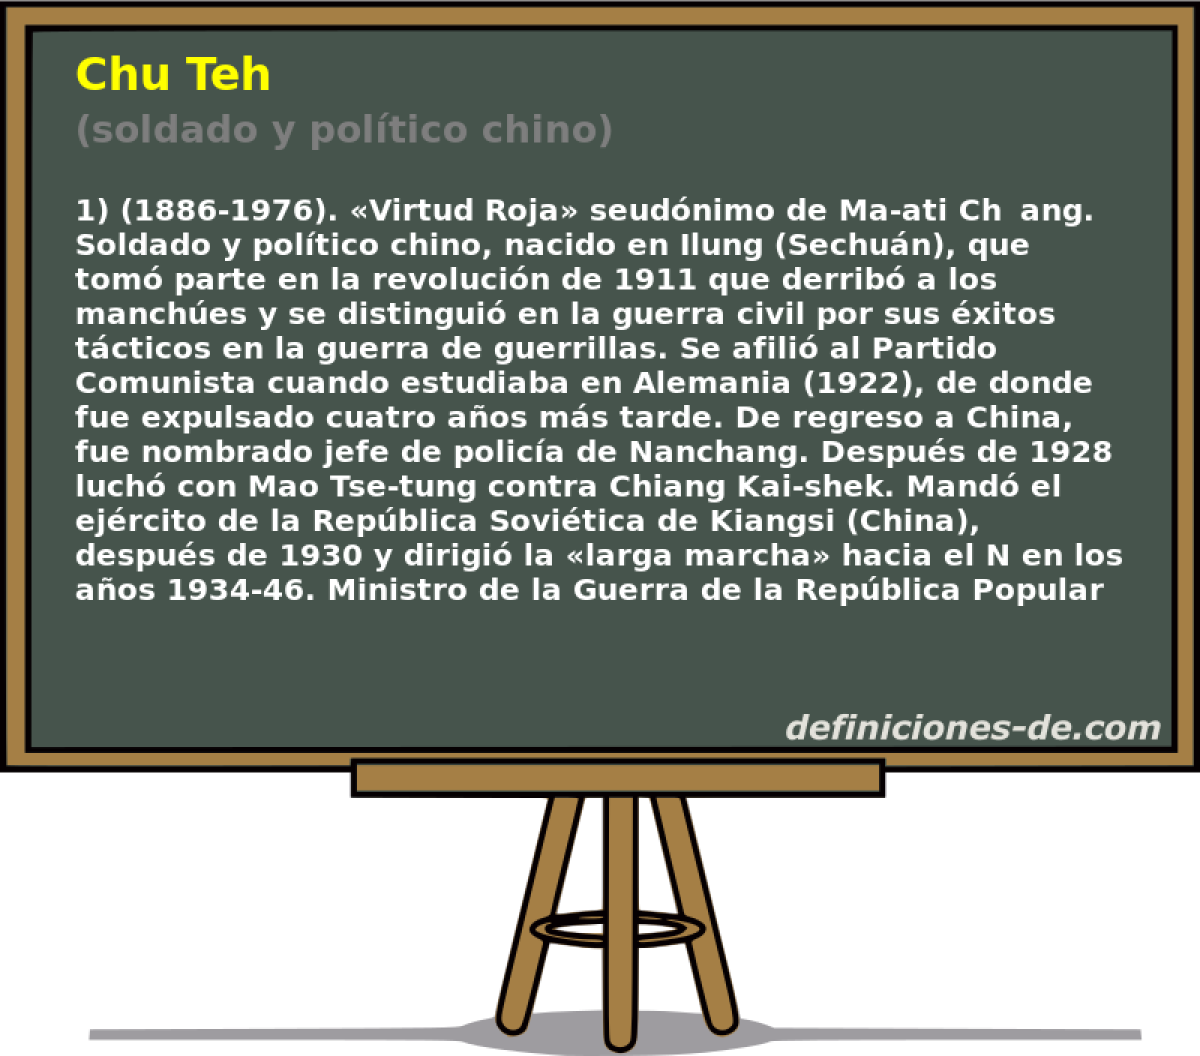 Chu Teh (soldado y poltico chino)